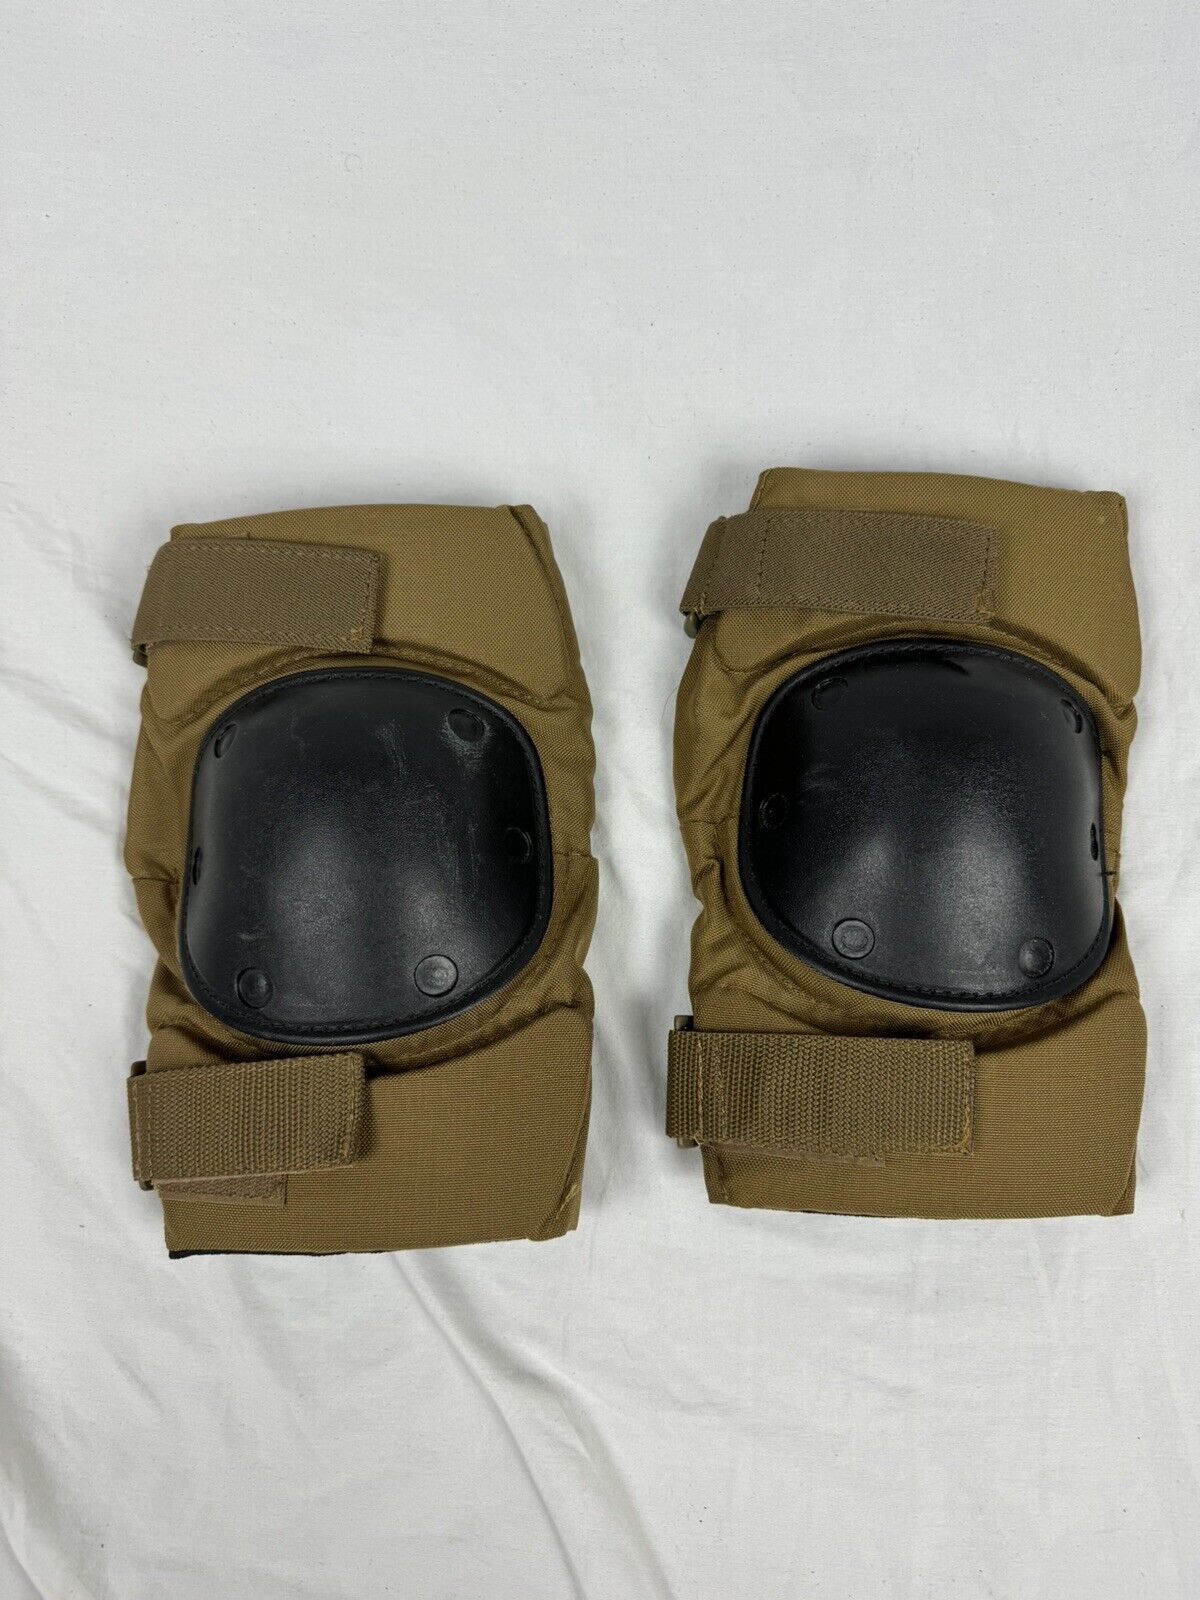 U.S. Military Army Knee Pads Coyote Brown/Black Size Medium (Lightly Used)